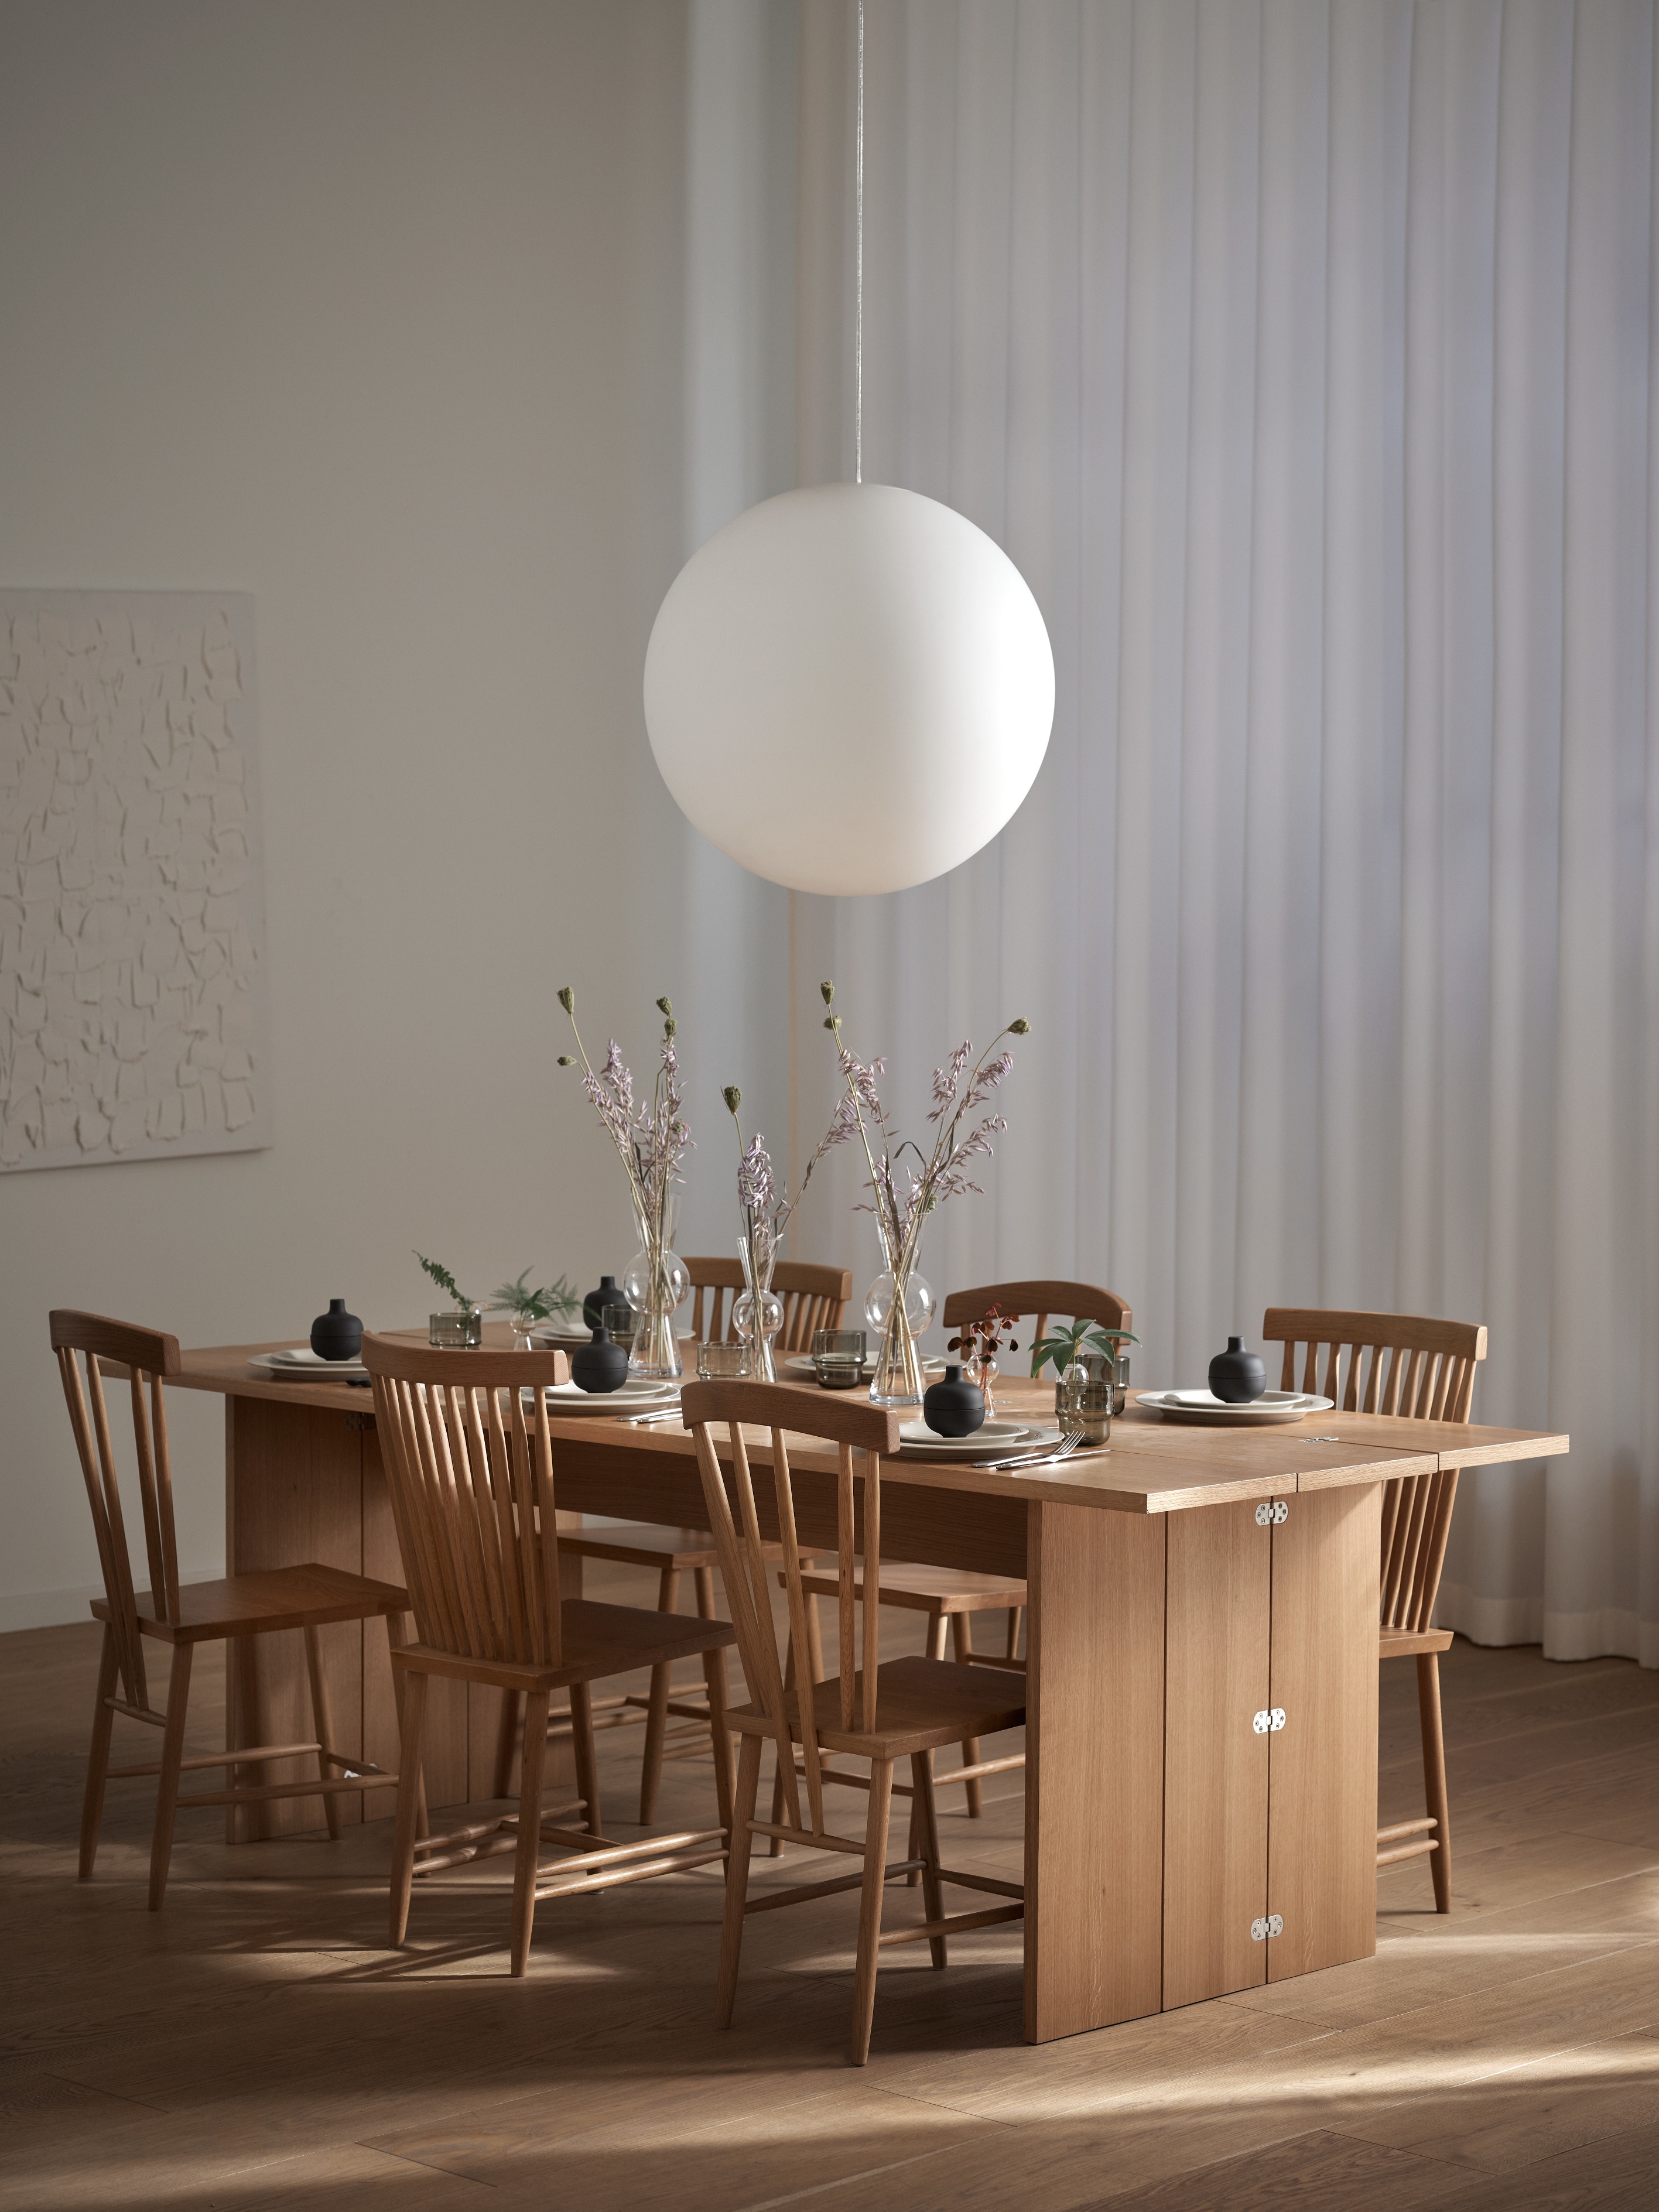 Suspension Lamp Luna Design House Stockholm XLarge White 60 cm